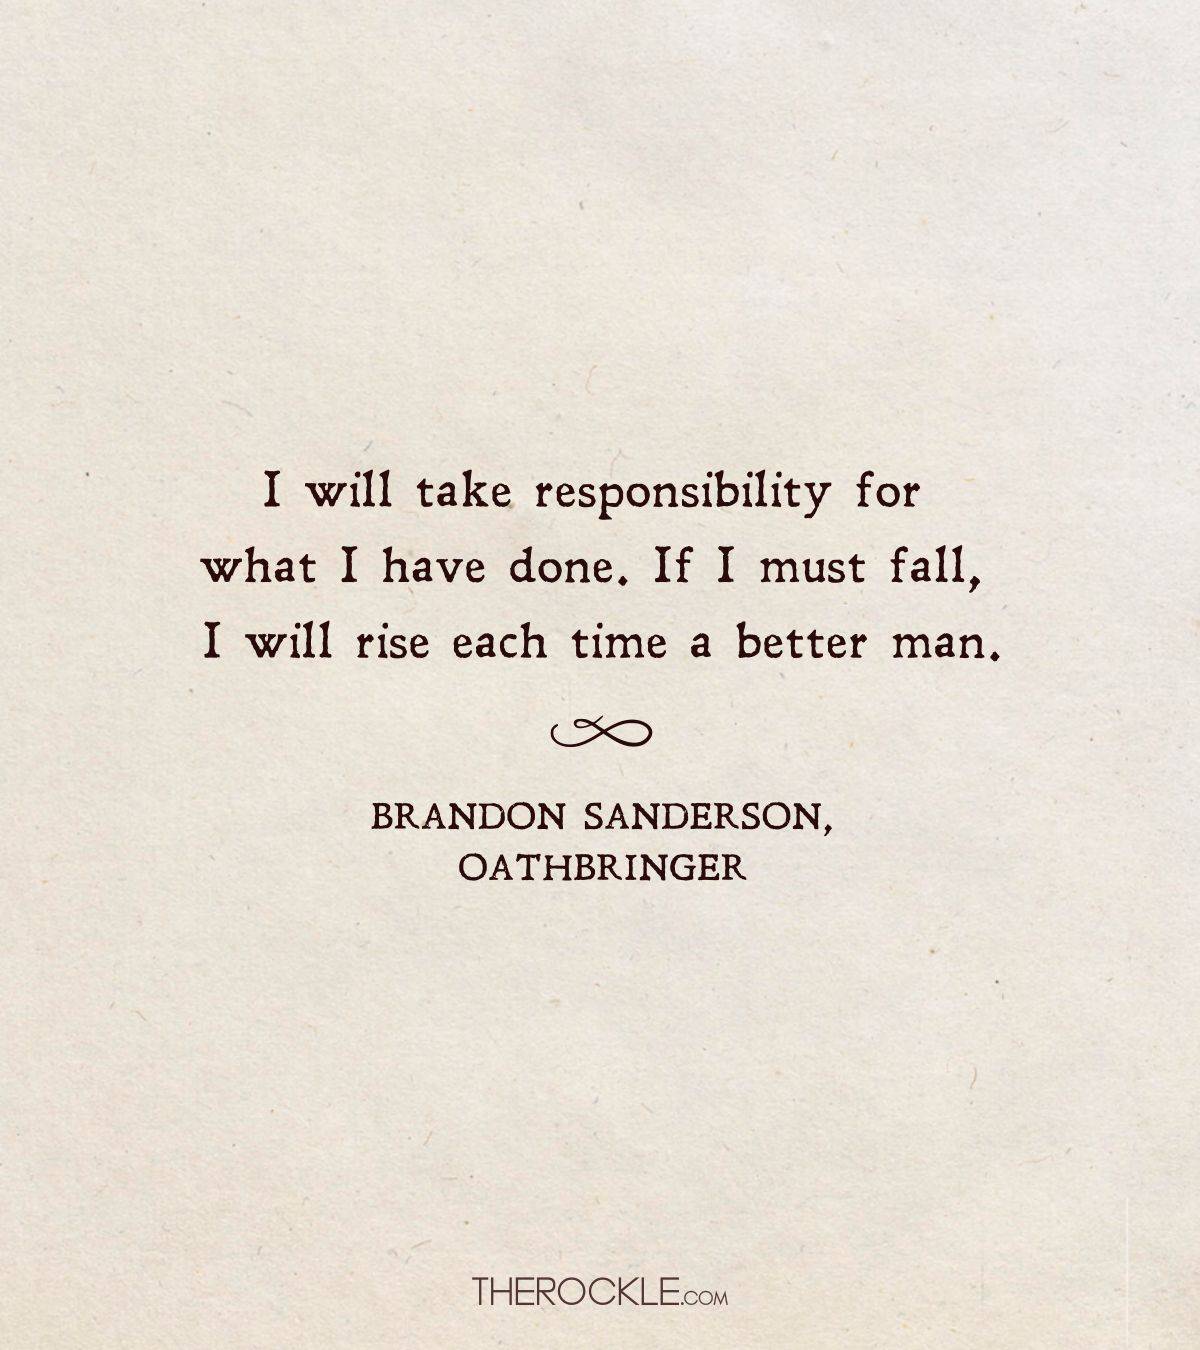 Sanderson quote on self-accountability